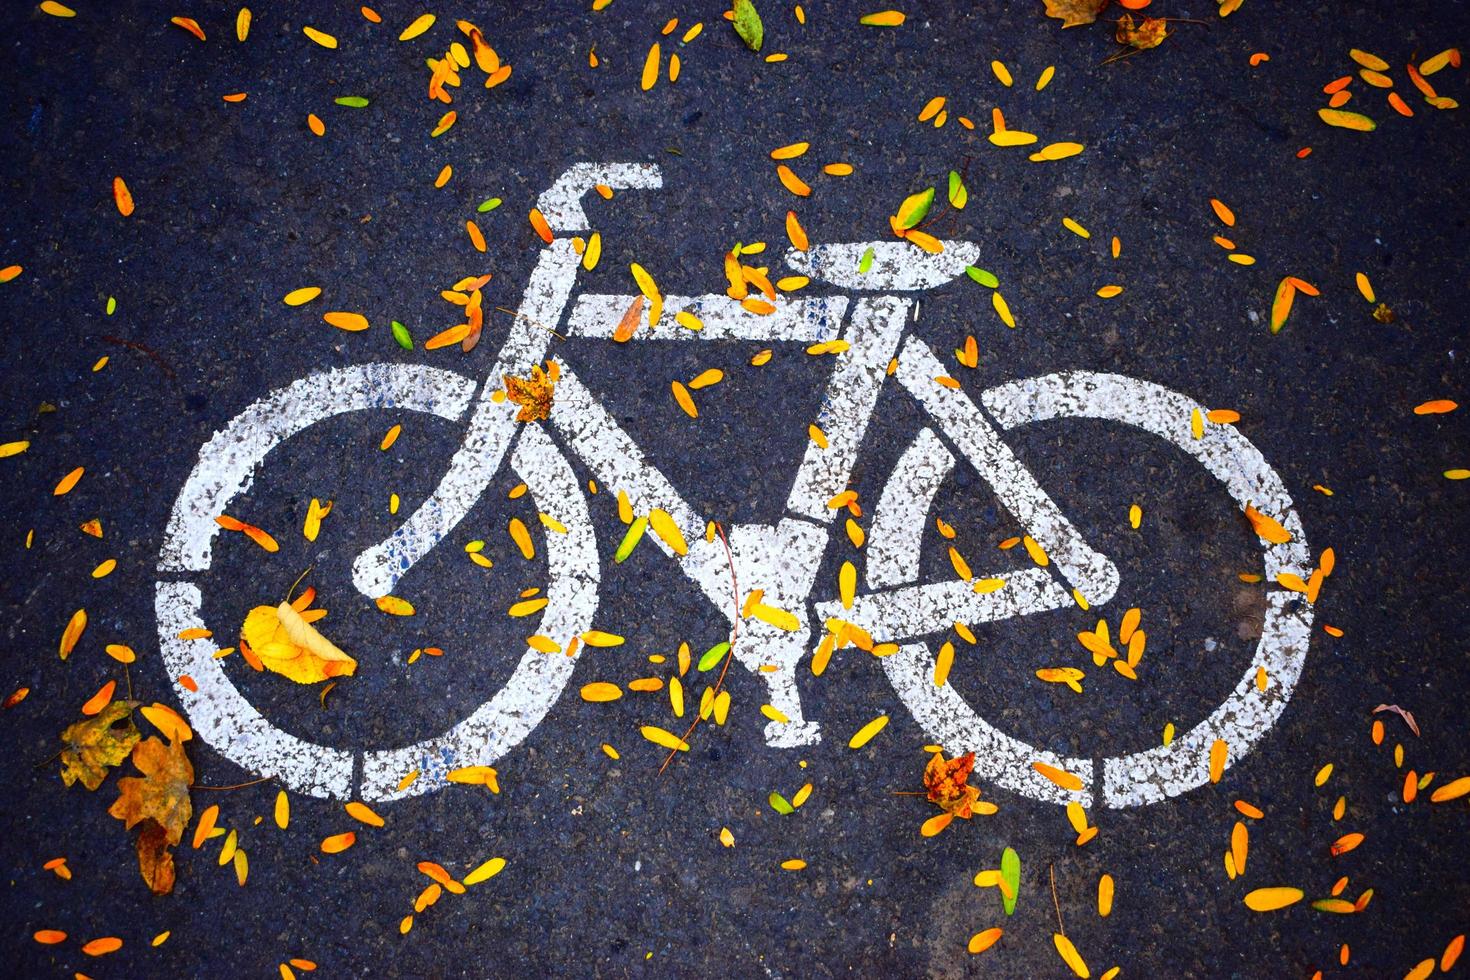 Fahrrad Straßenschild foto